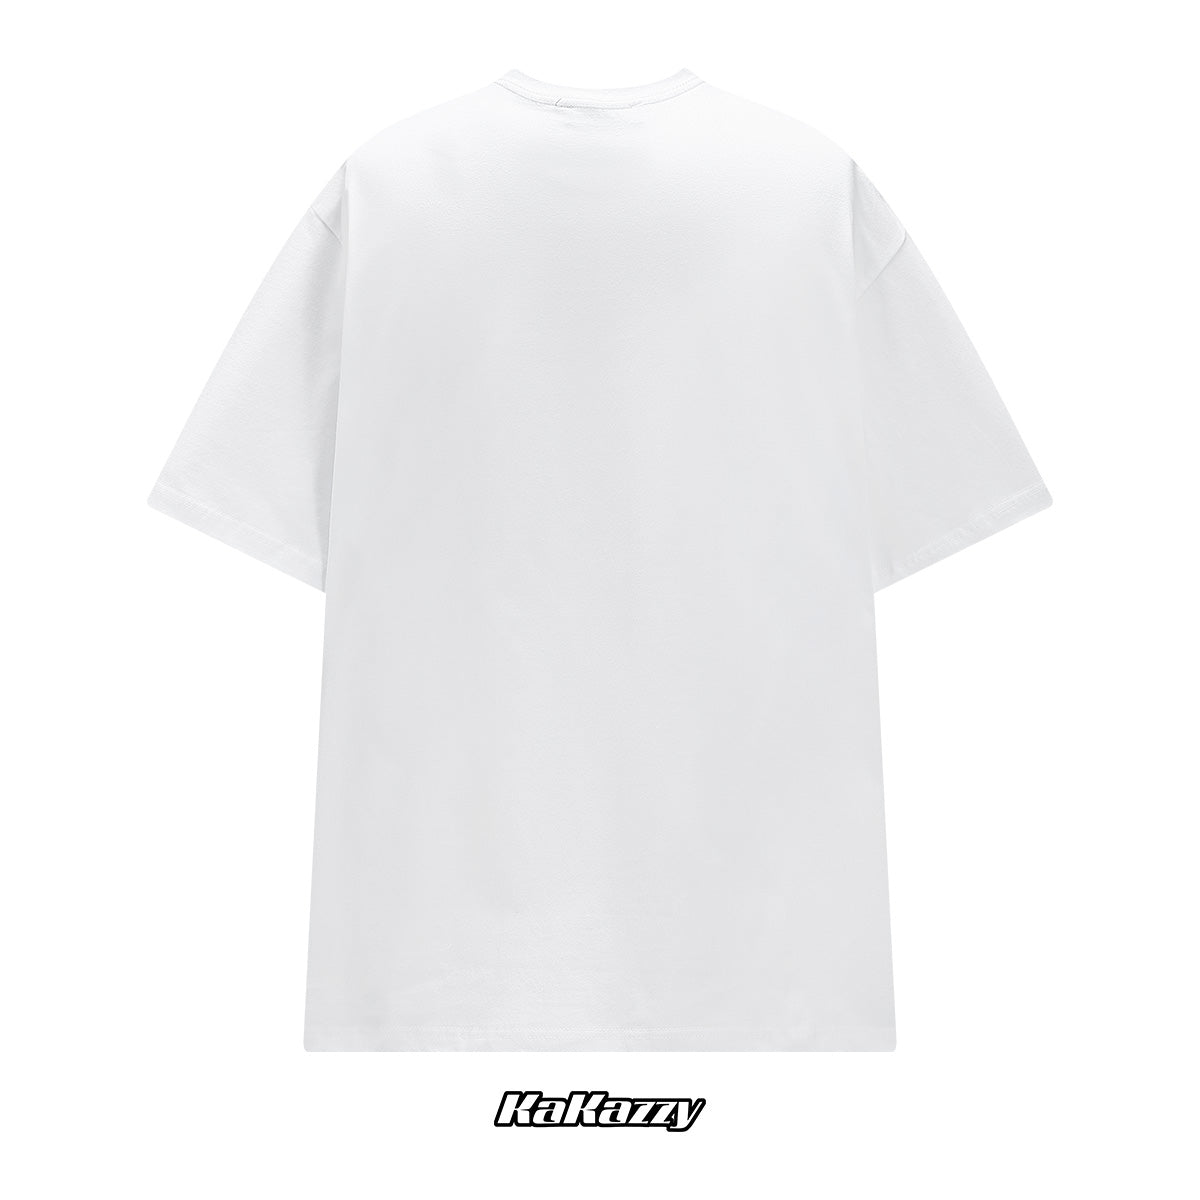 Kakazzy T-Shirt Tee Black and White